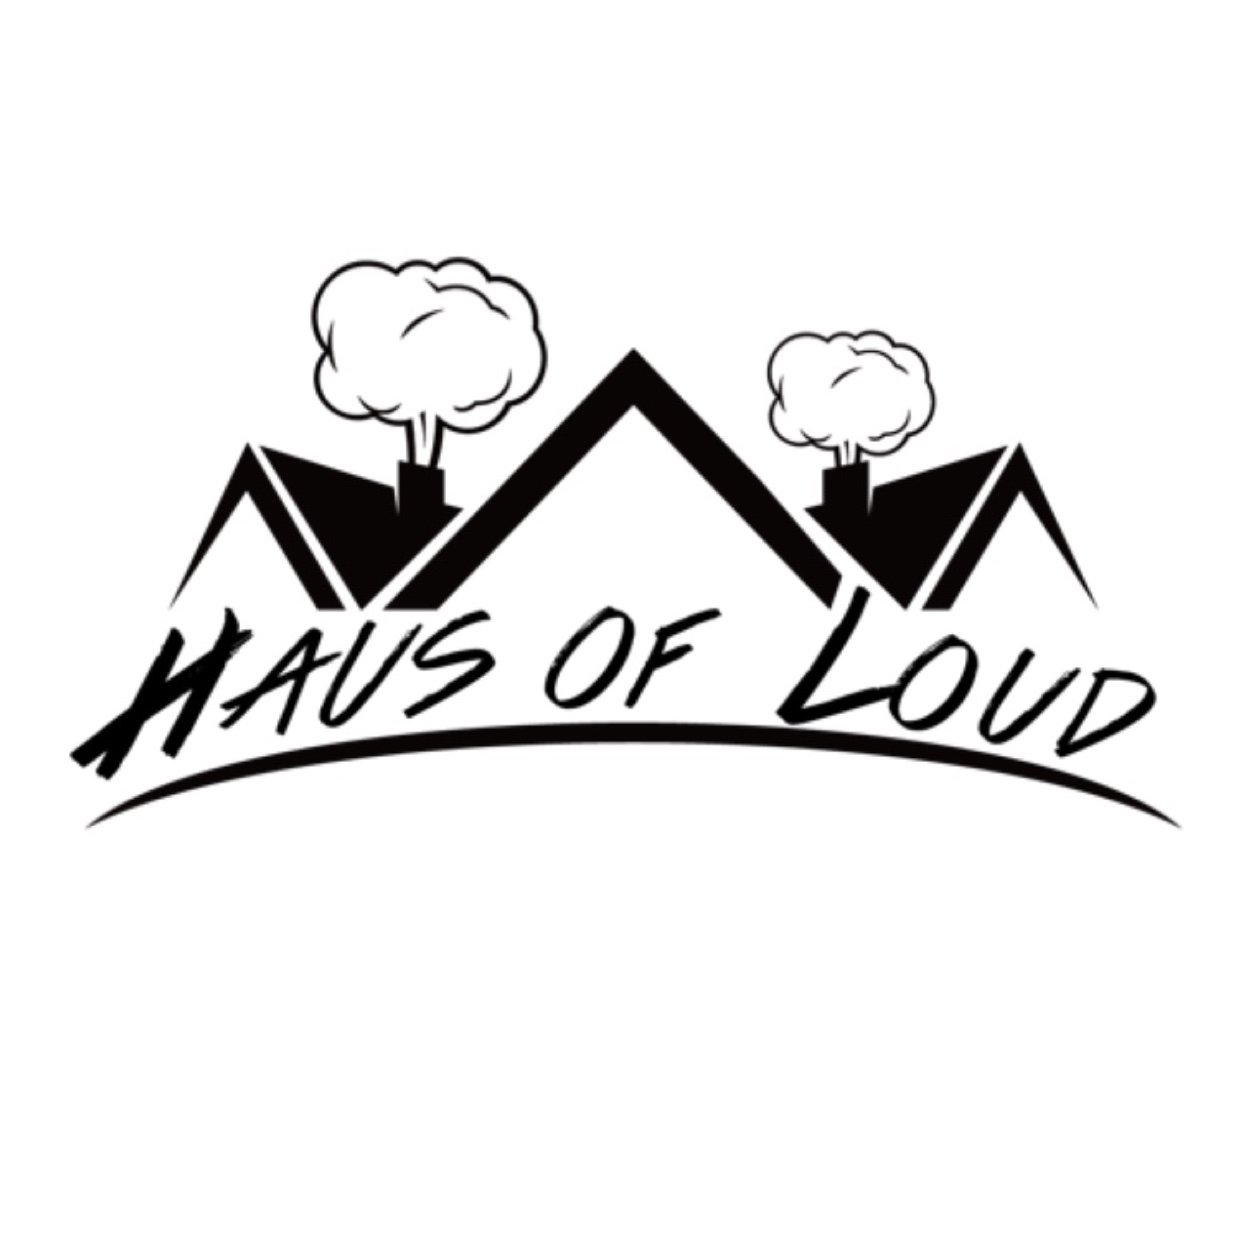 Haus of Loud